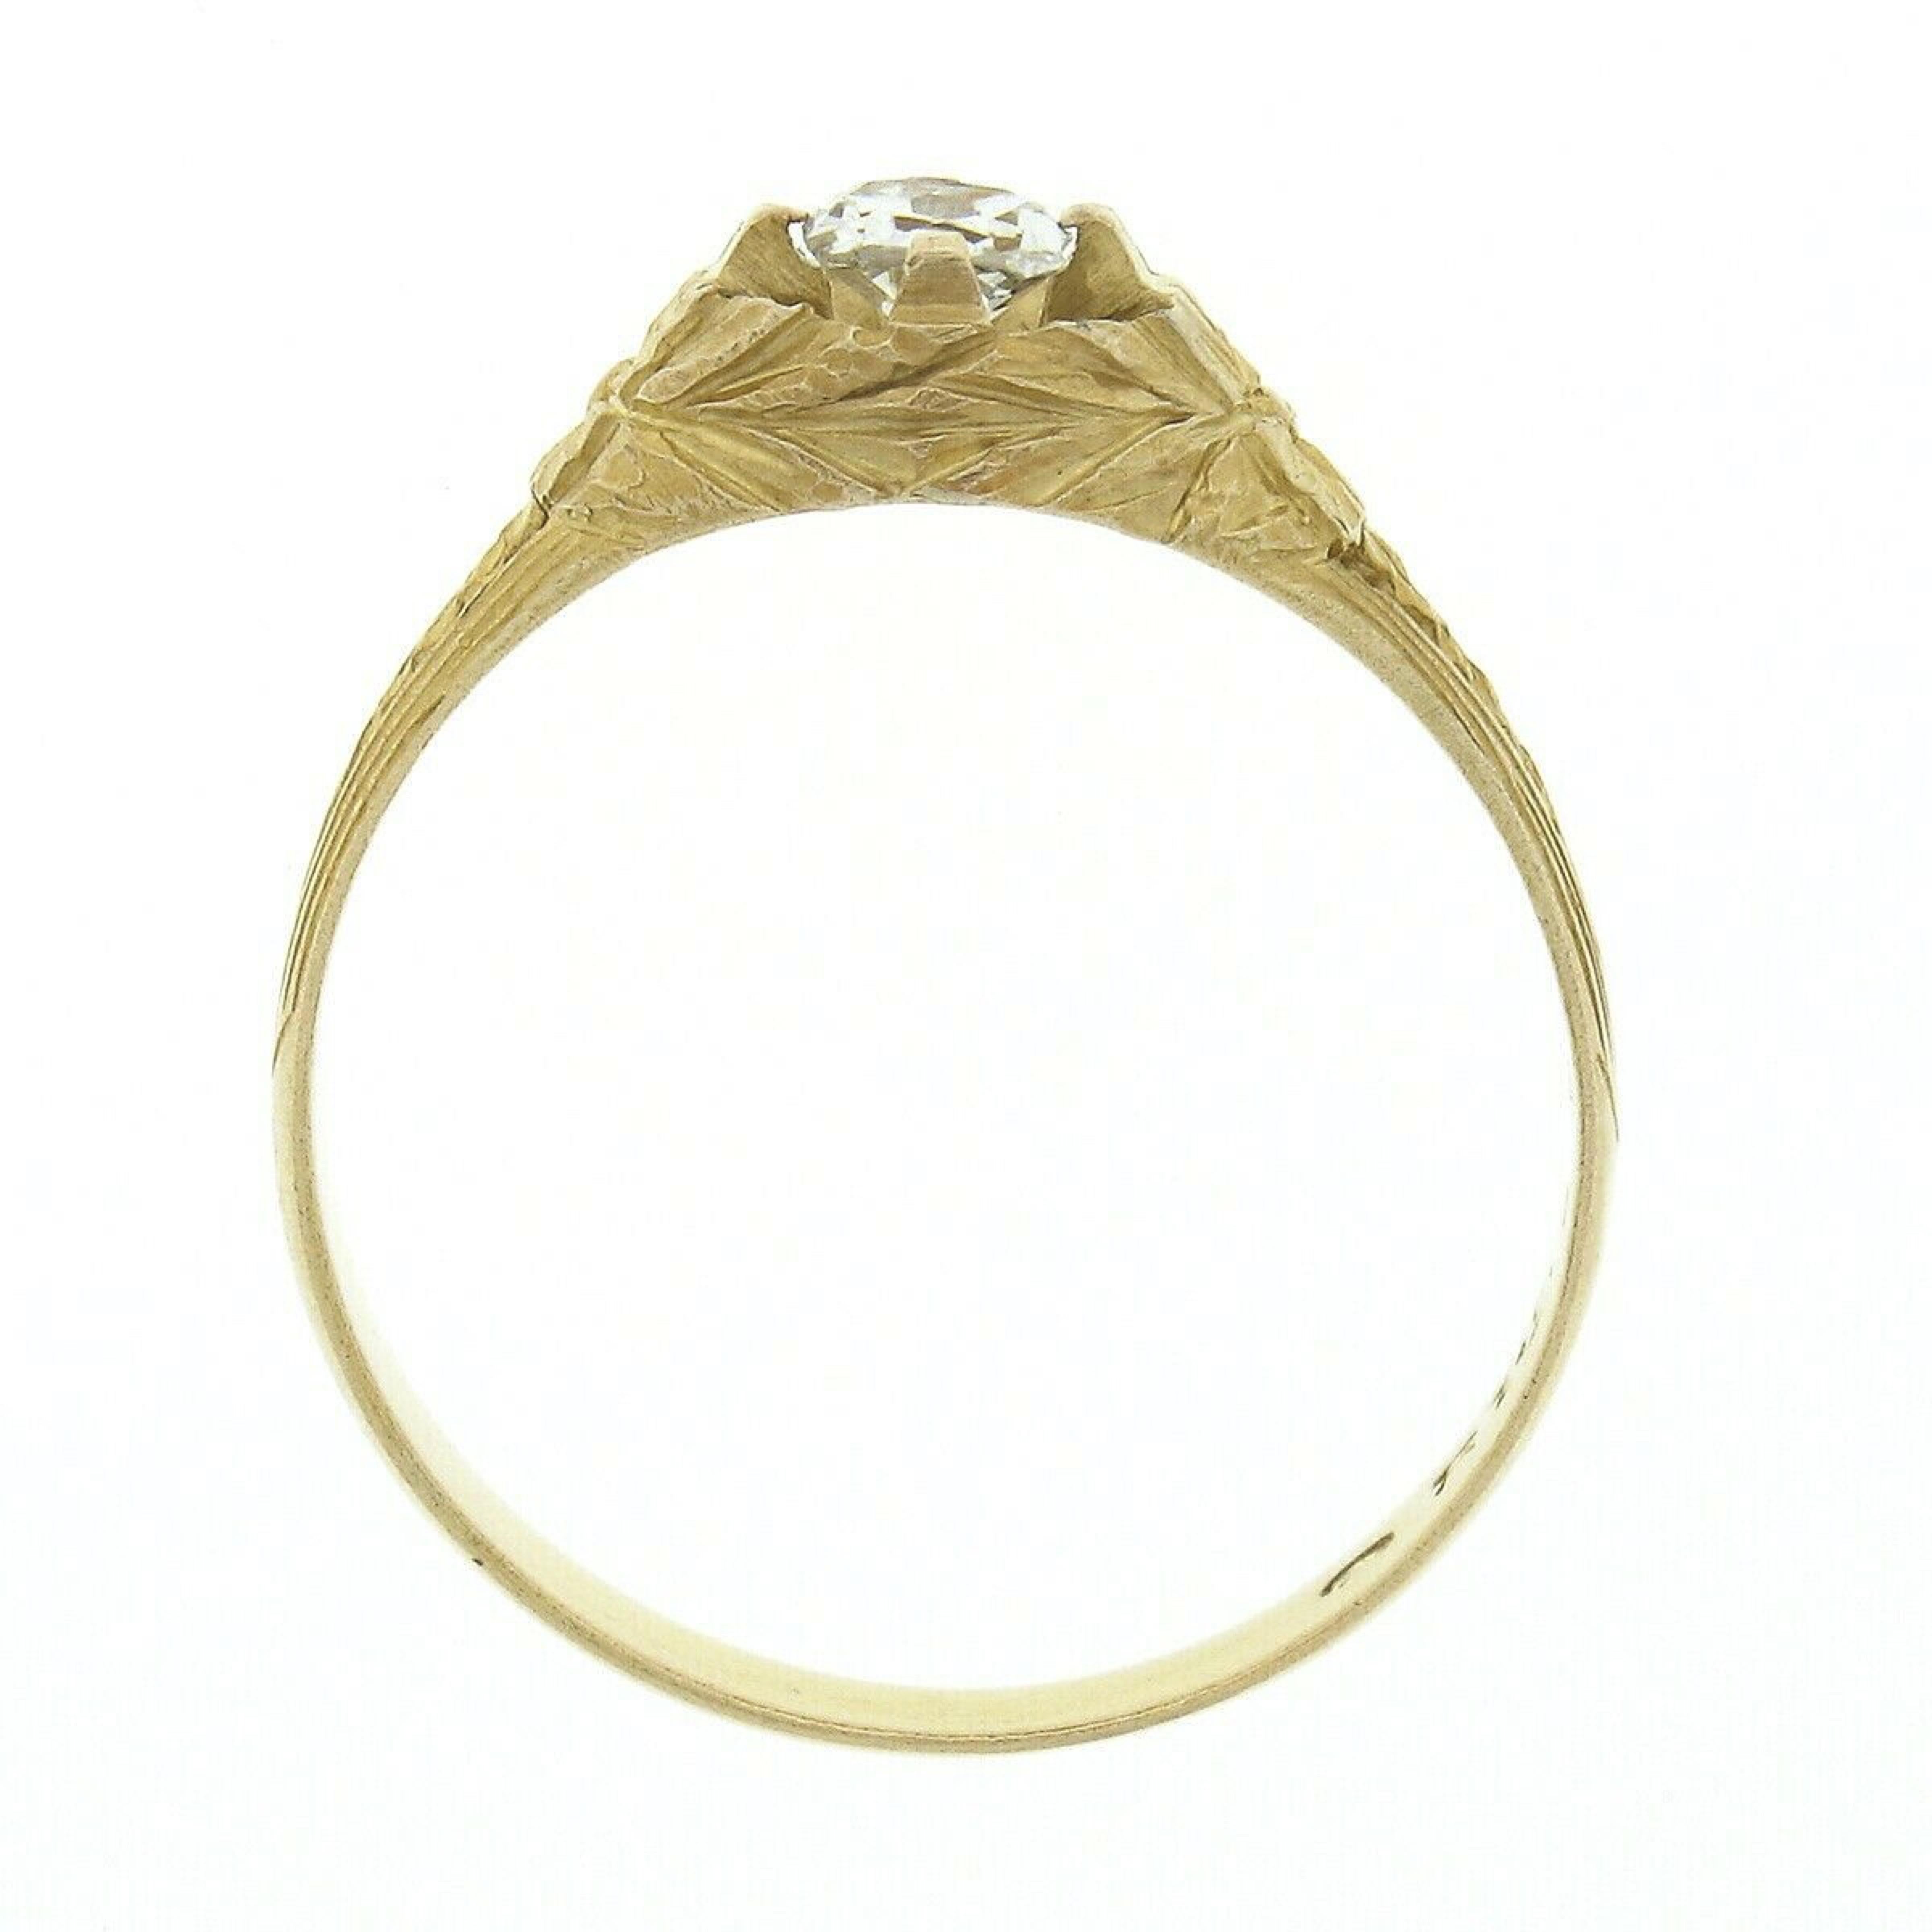 Antique Art Nouveau 14k Gold Old Mine Cut Diamond Hand Engraved Engagement Ring For Sale 1